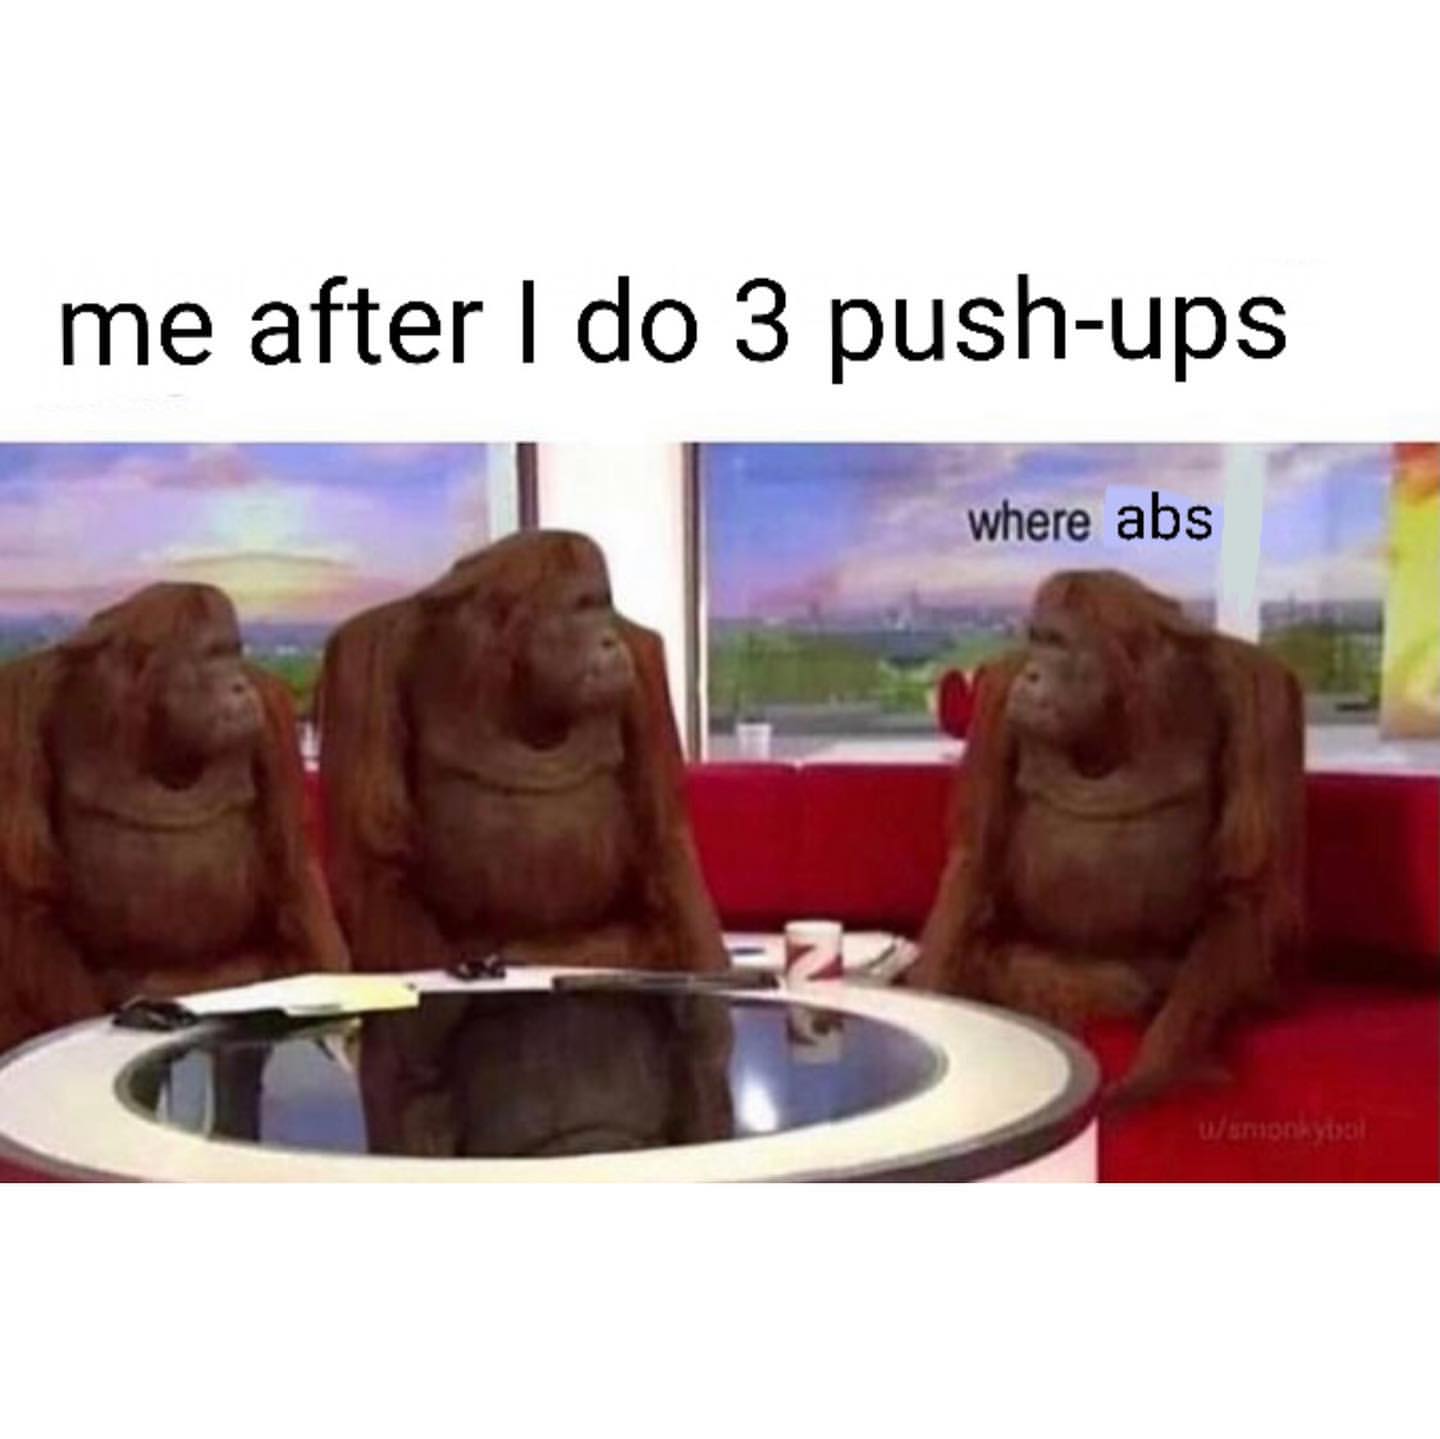 Me after I do 3 push-ups. Where abs.